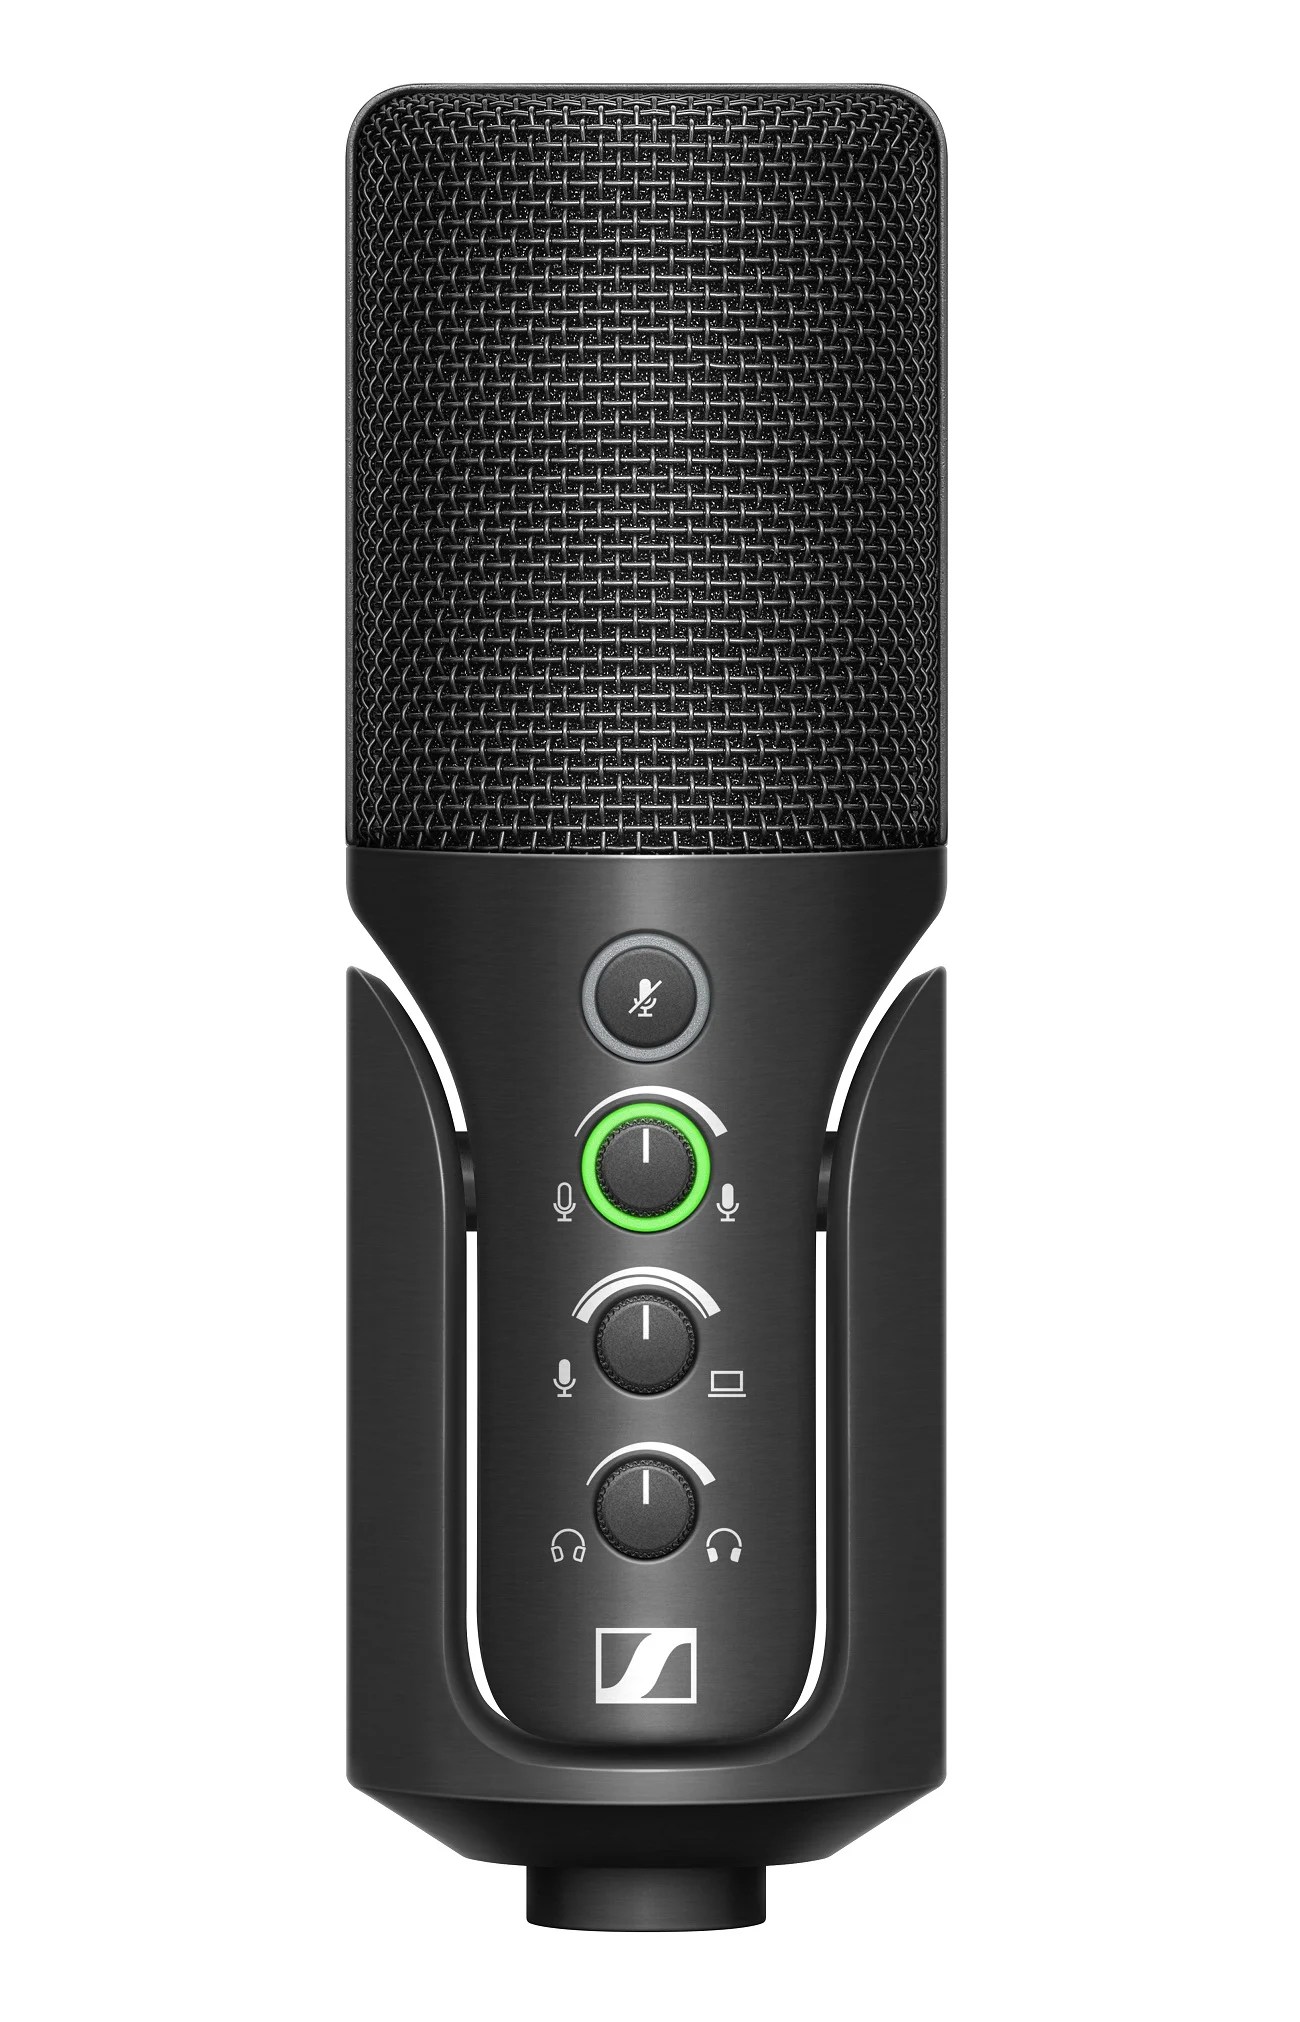 Le Sennheiser Profile USB Microphone